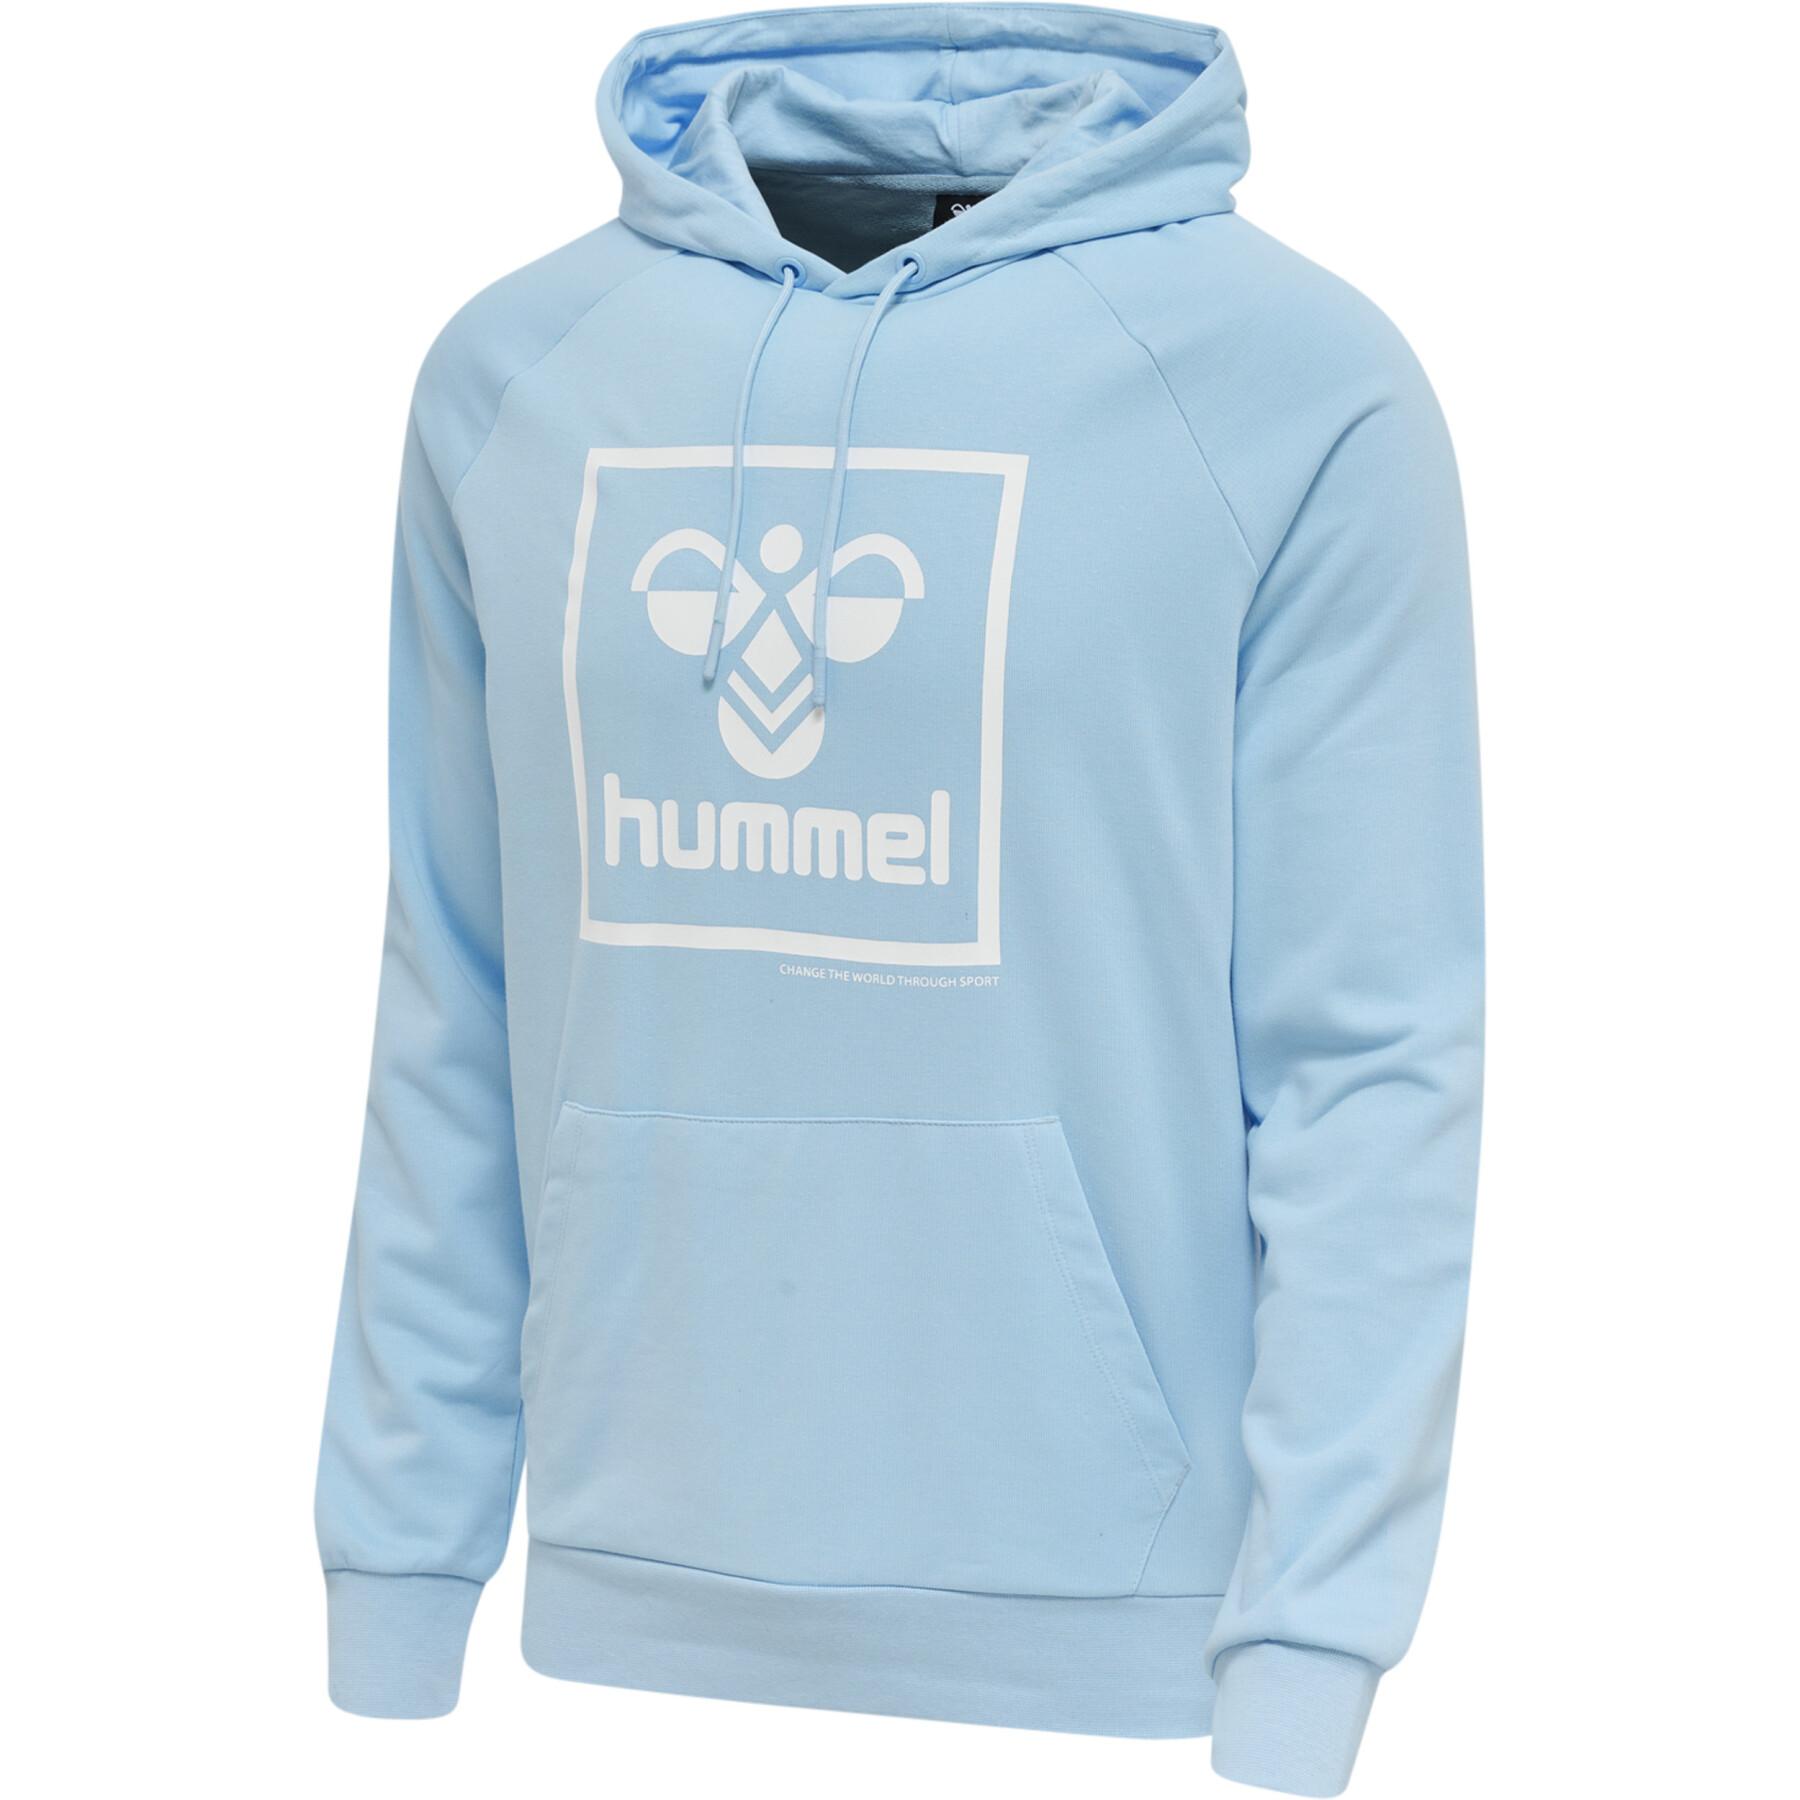 Isam Brands Hummel - - - 2.0 Hooded Hummel sweatshirt Lifestyle